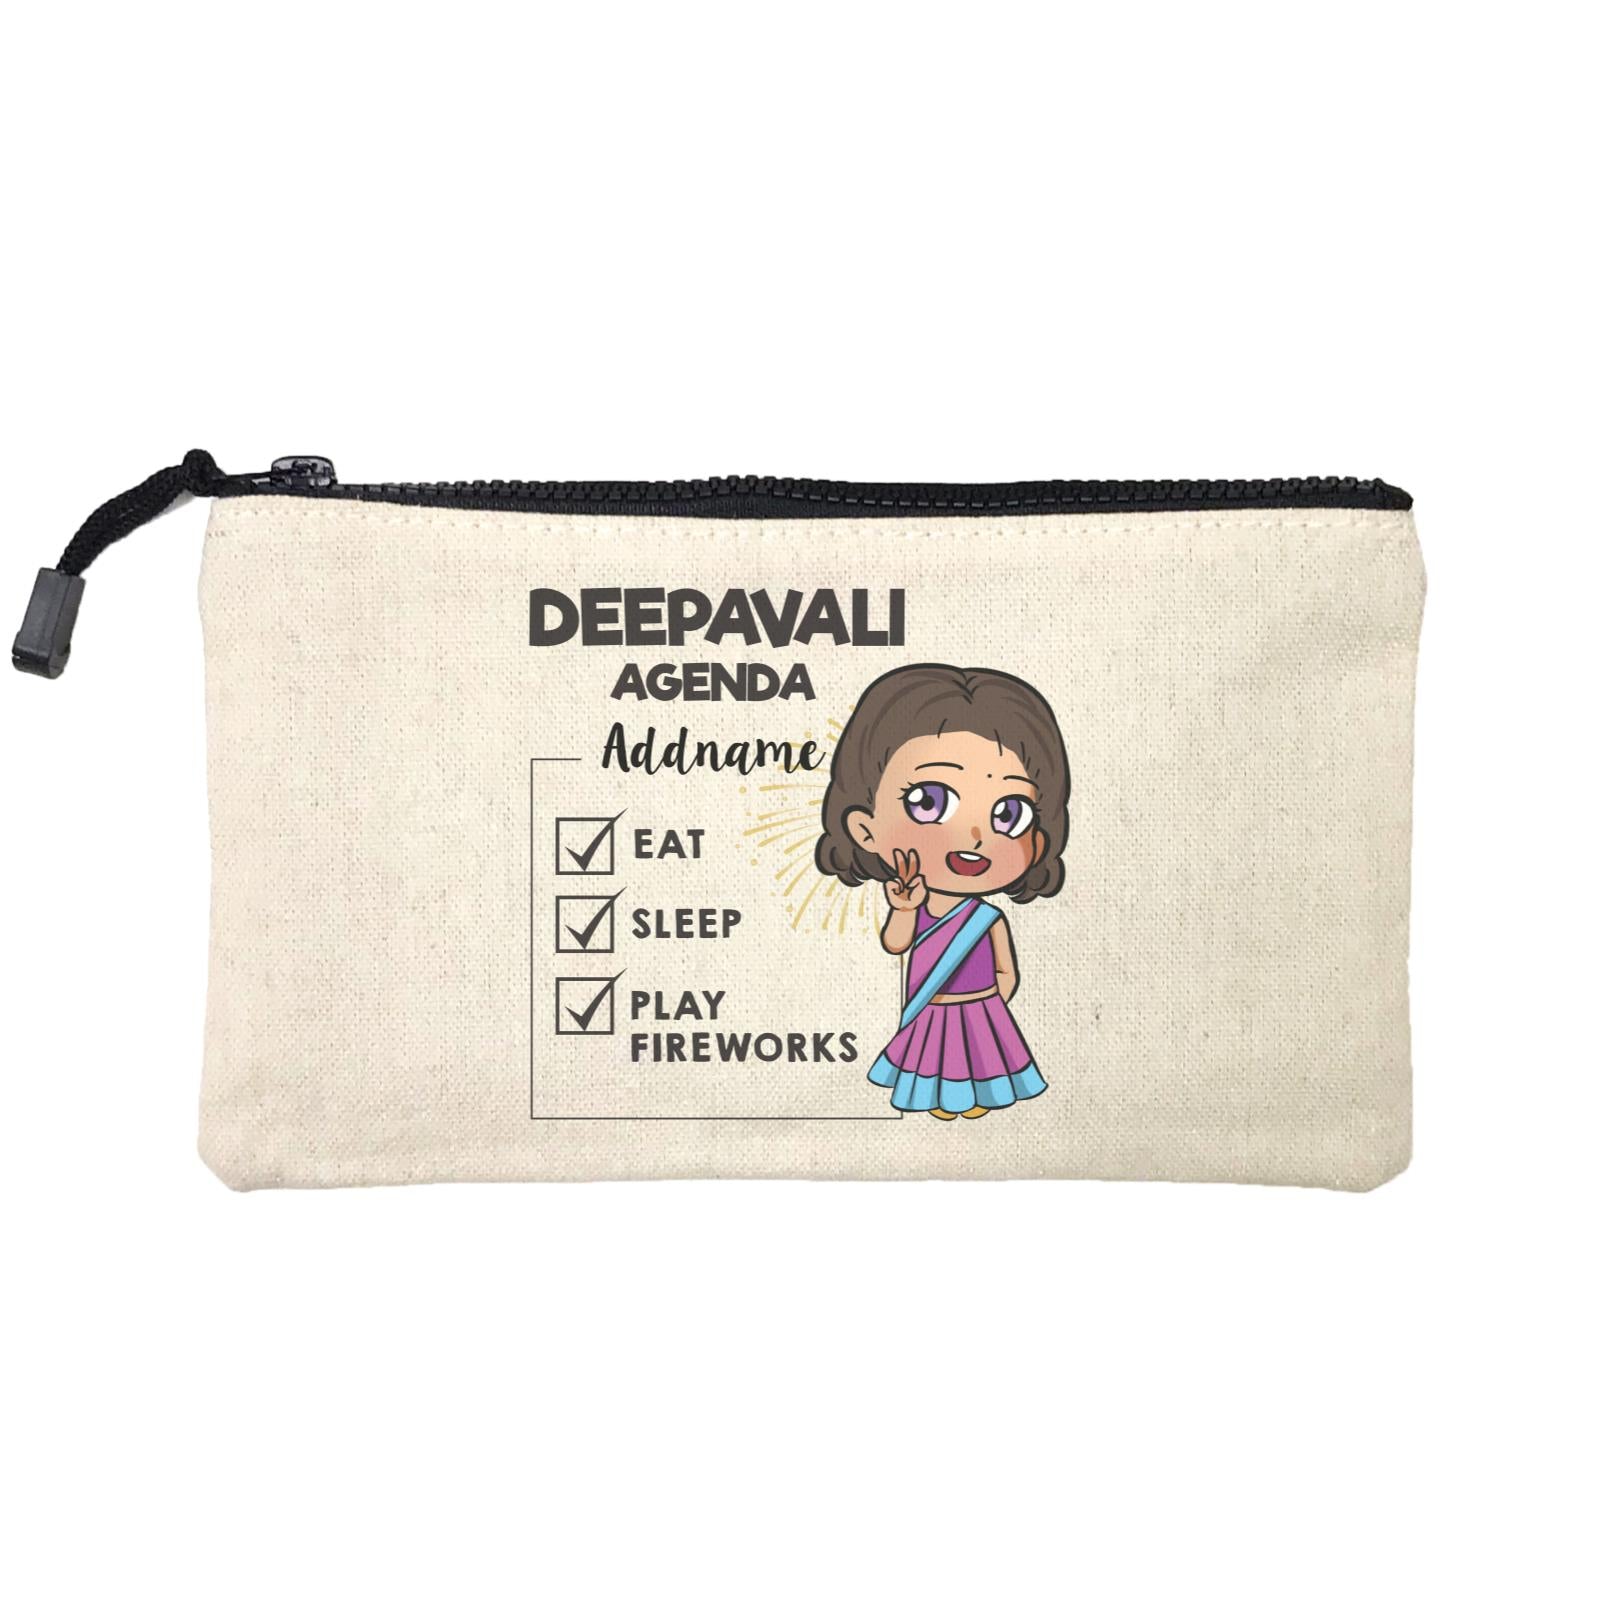 Deepavali Chibi Little Girl Agenda Addname Mini Accessories Stationery Pouch